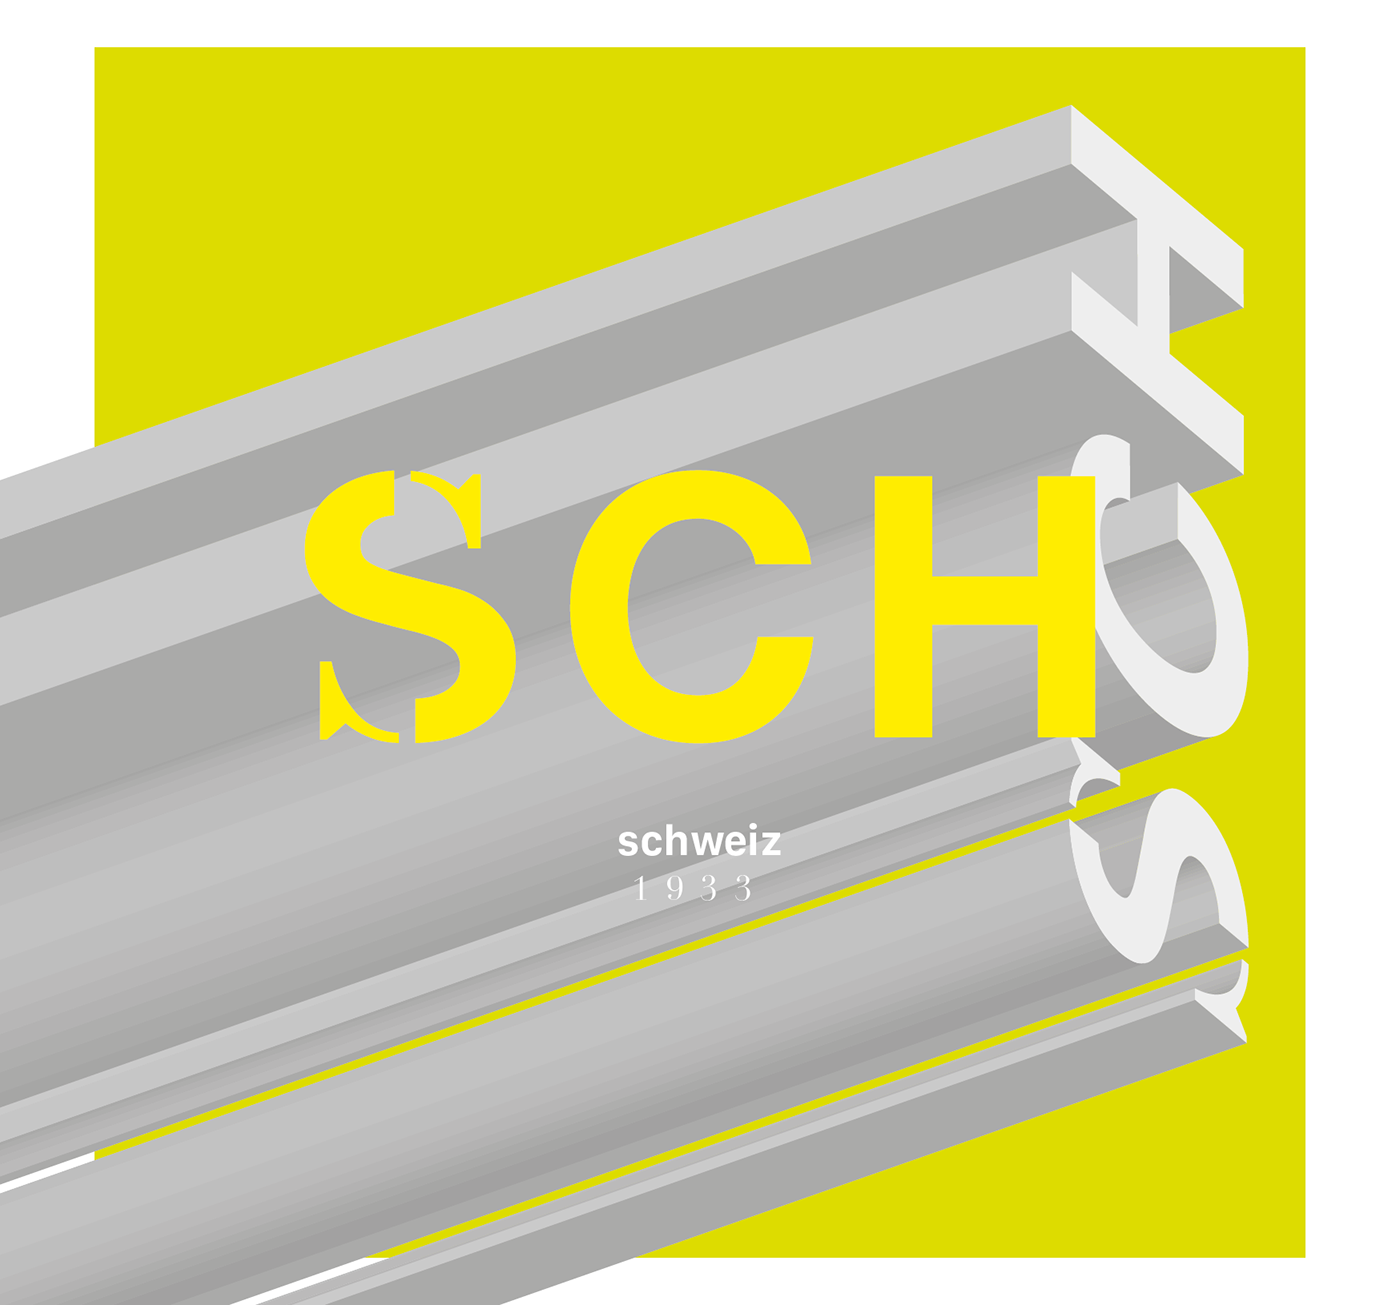 jan tschichold johannes neue typography Typographische Gestaltung font jantschichold serif sans-serif lettering biography University iusve